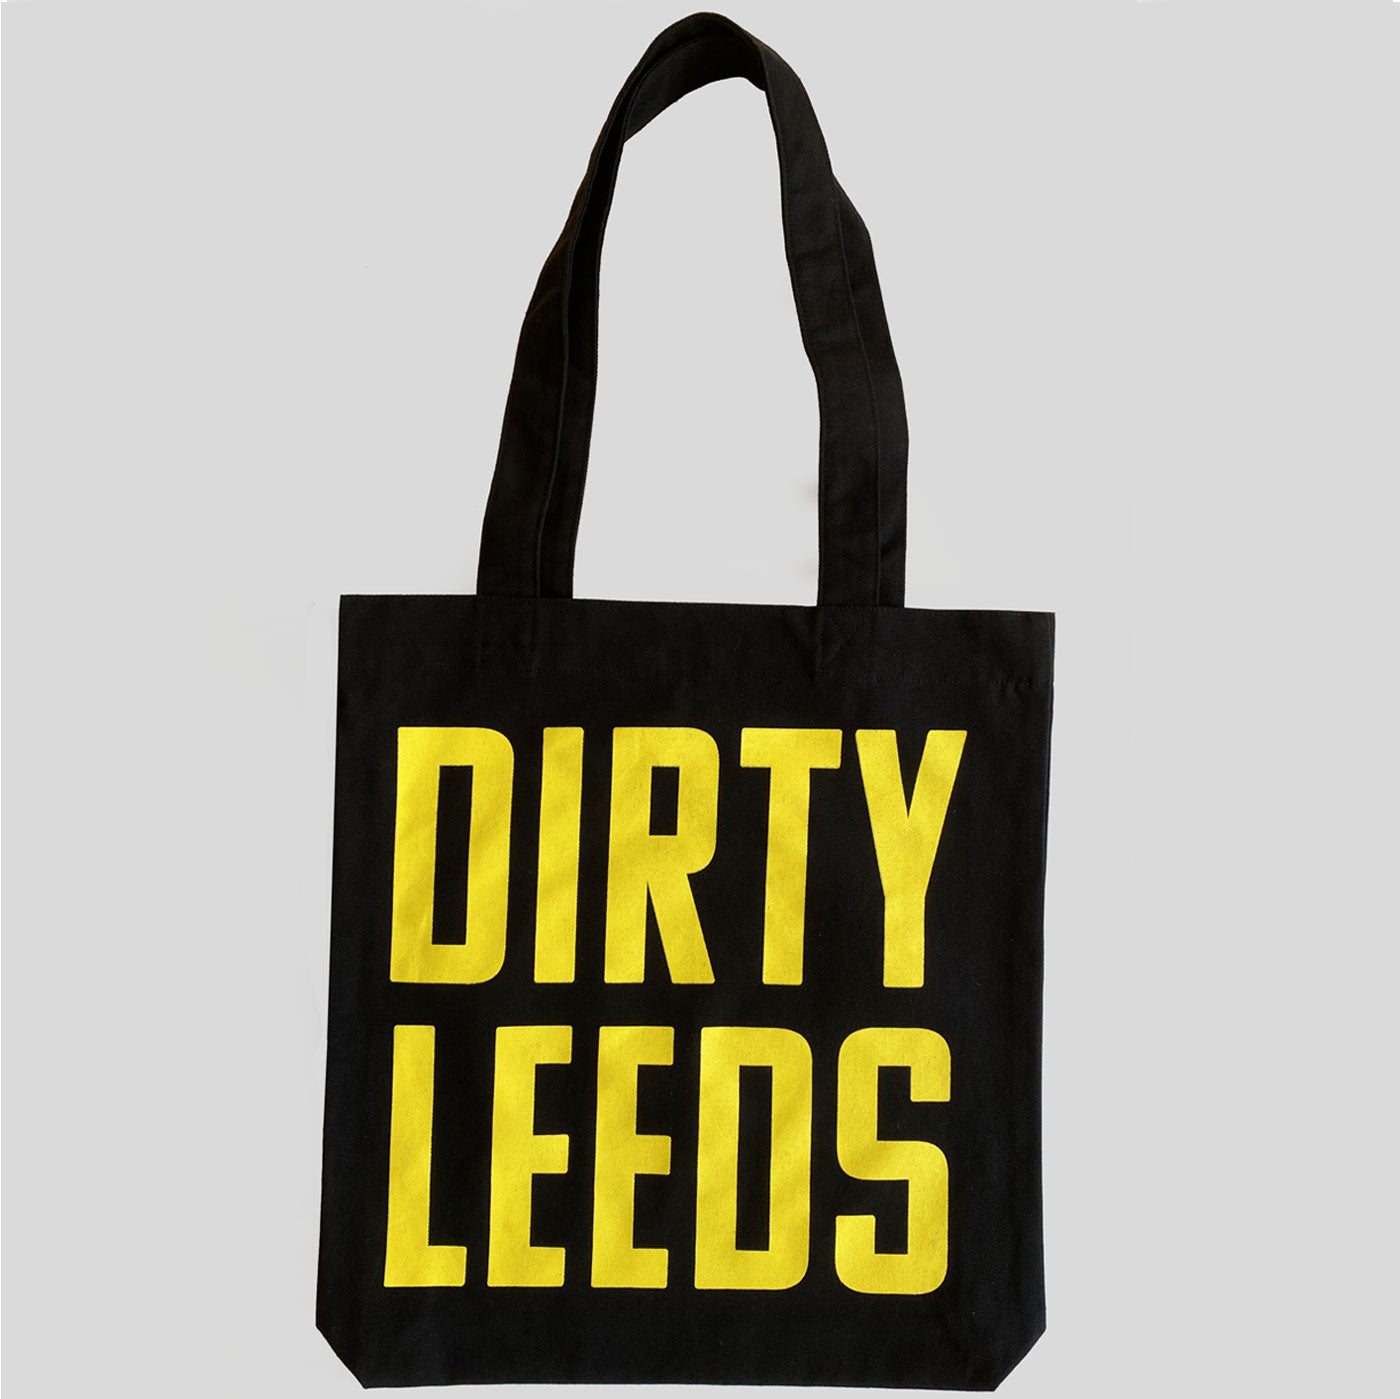 Shop | The Yorkshire Fox Handbags Leeds UK